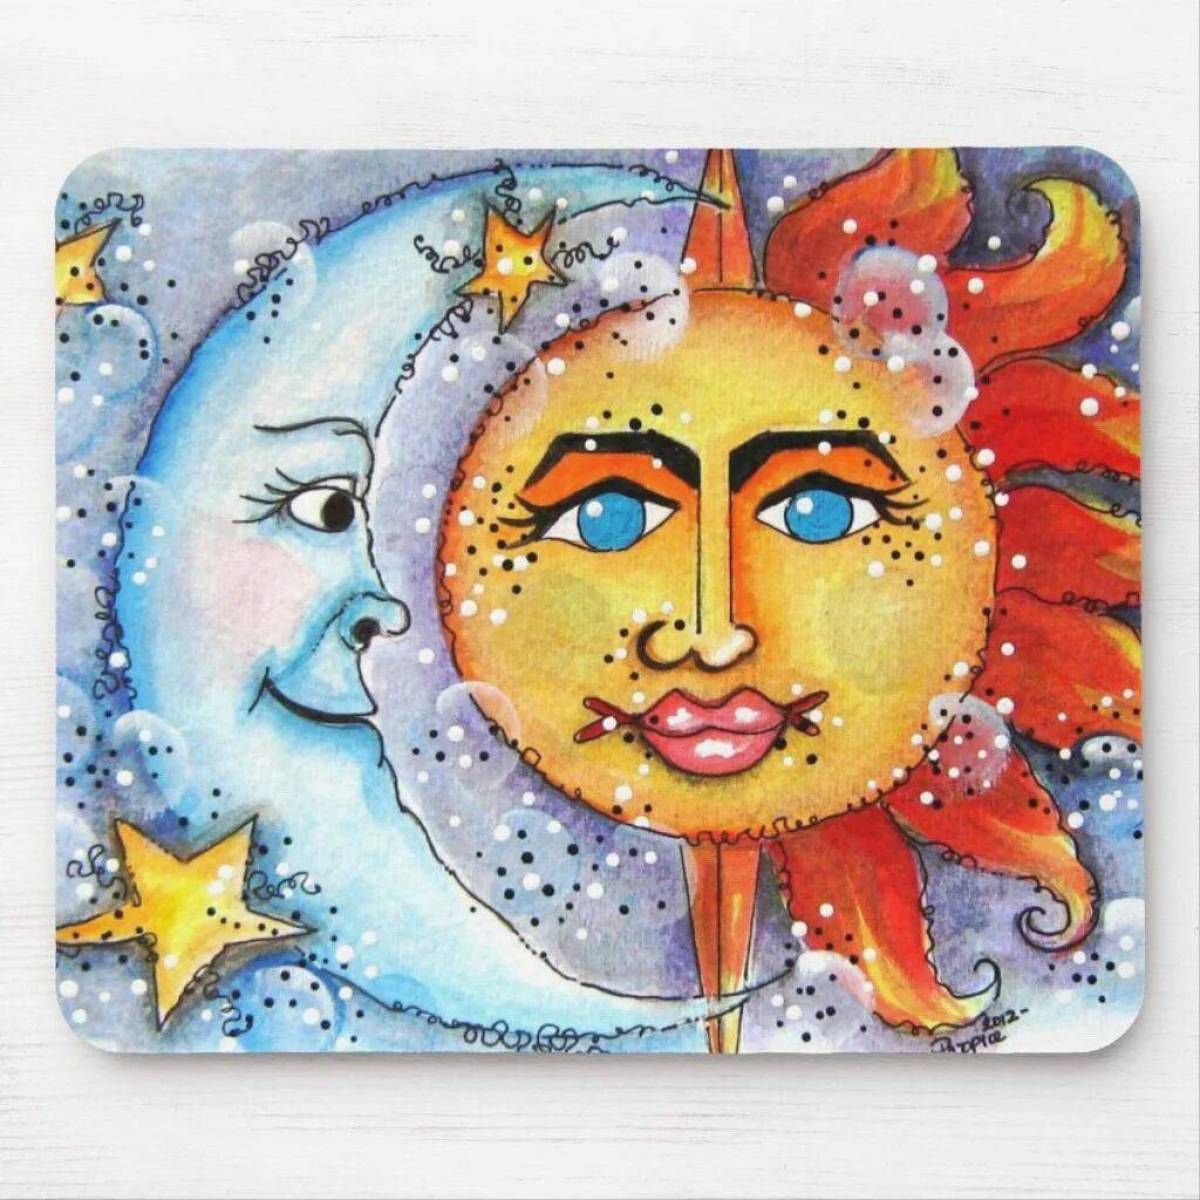 Детский мир луна. Солнце и Луна. Изображение солнца и Луны. Солнце Луна и звезды. Солнце и Луна иллюстрации.